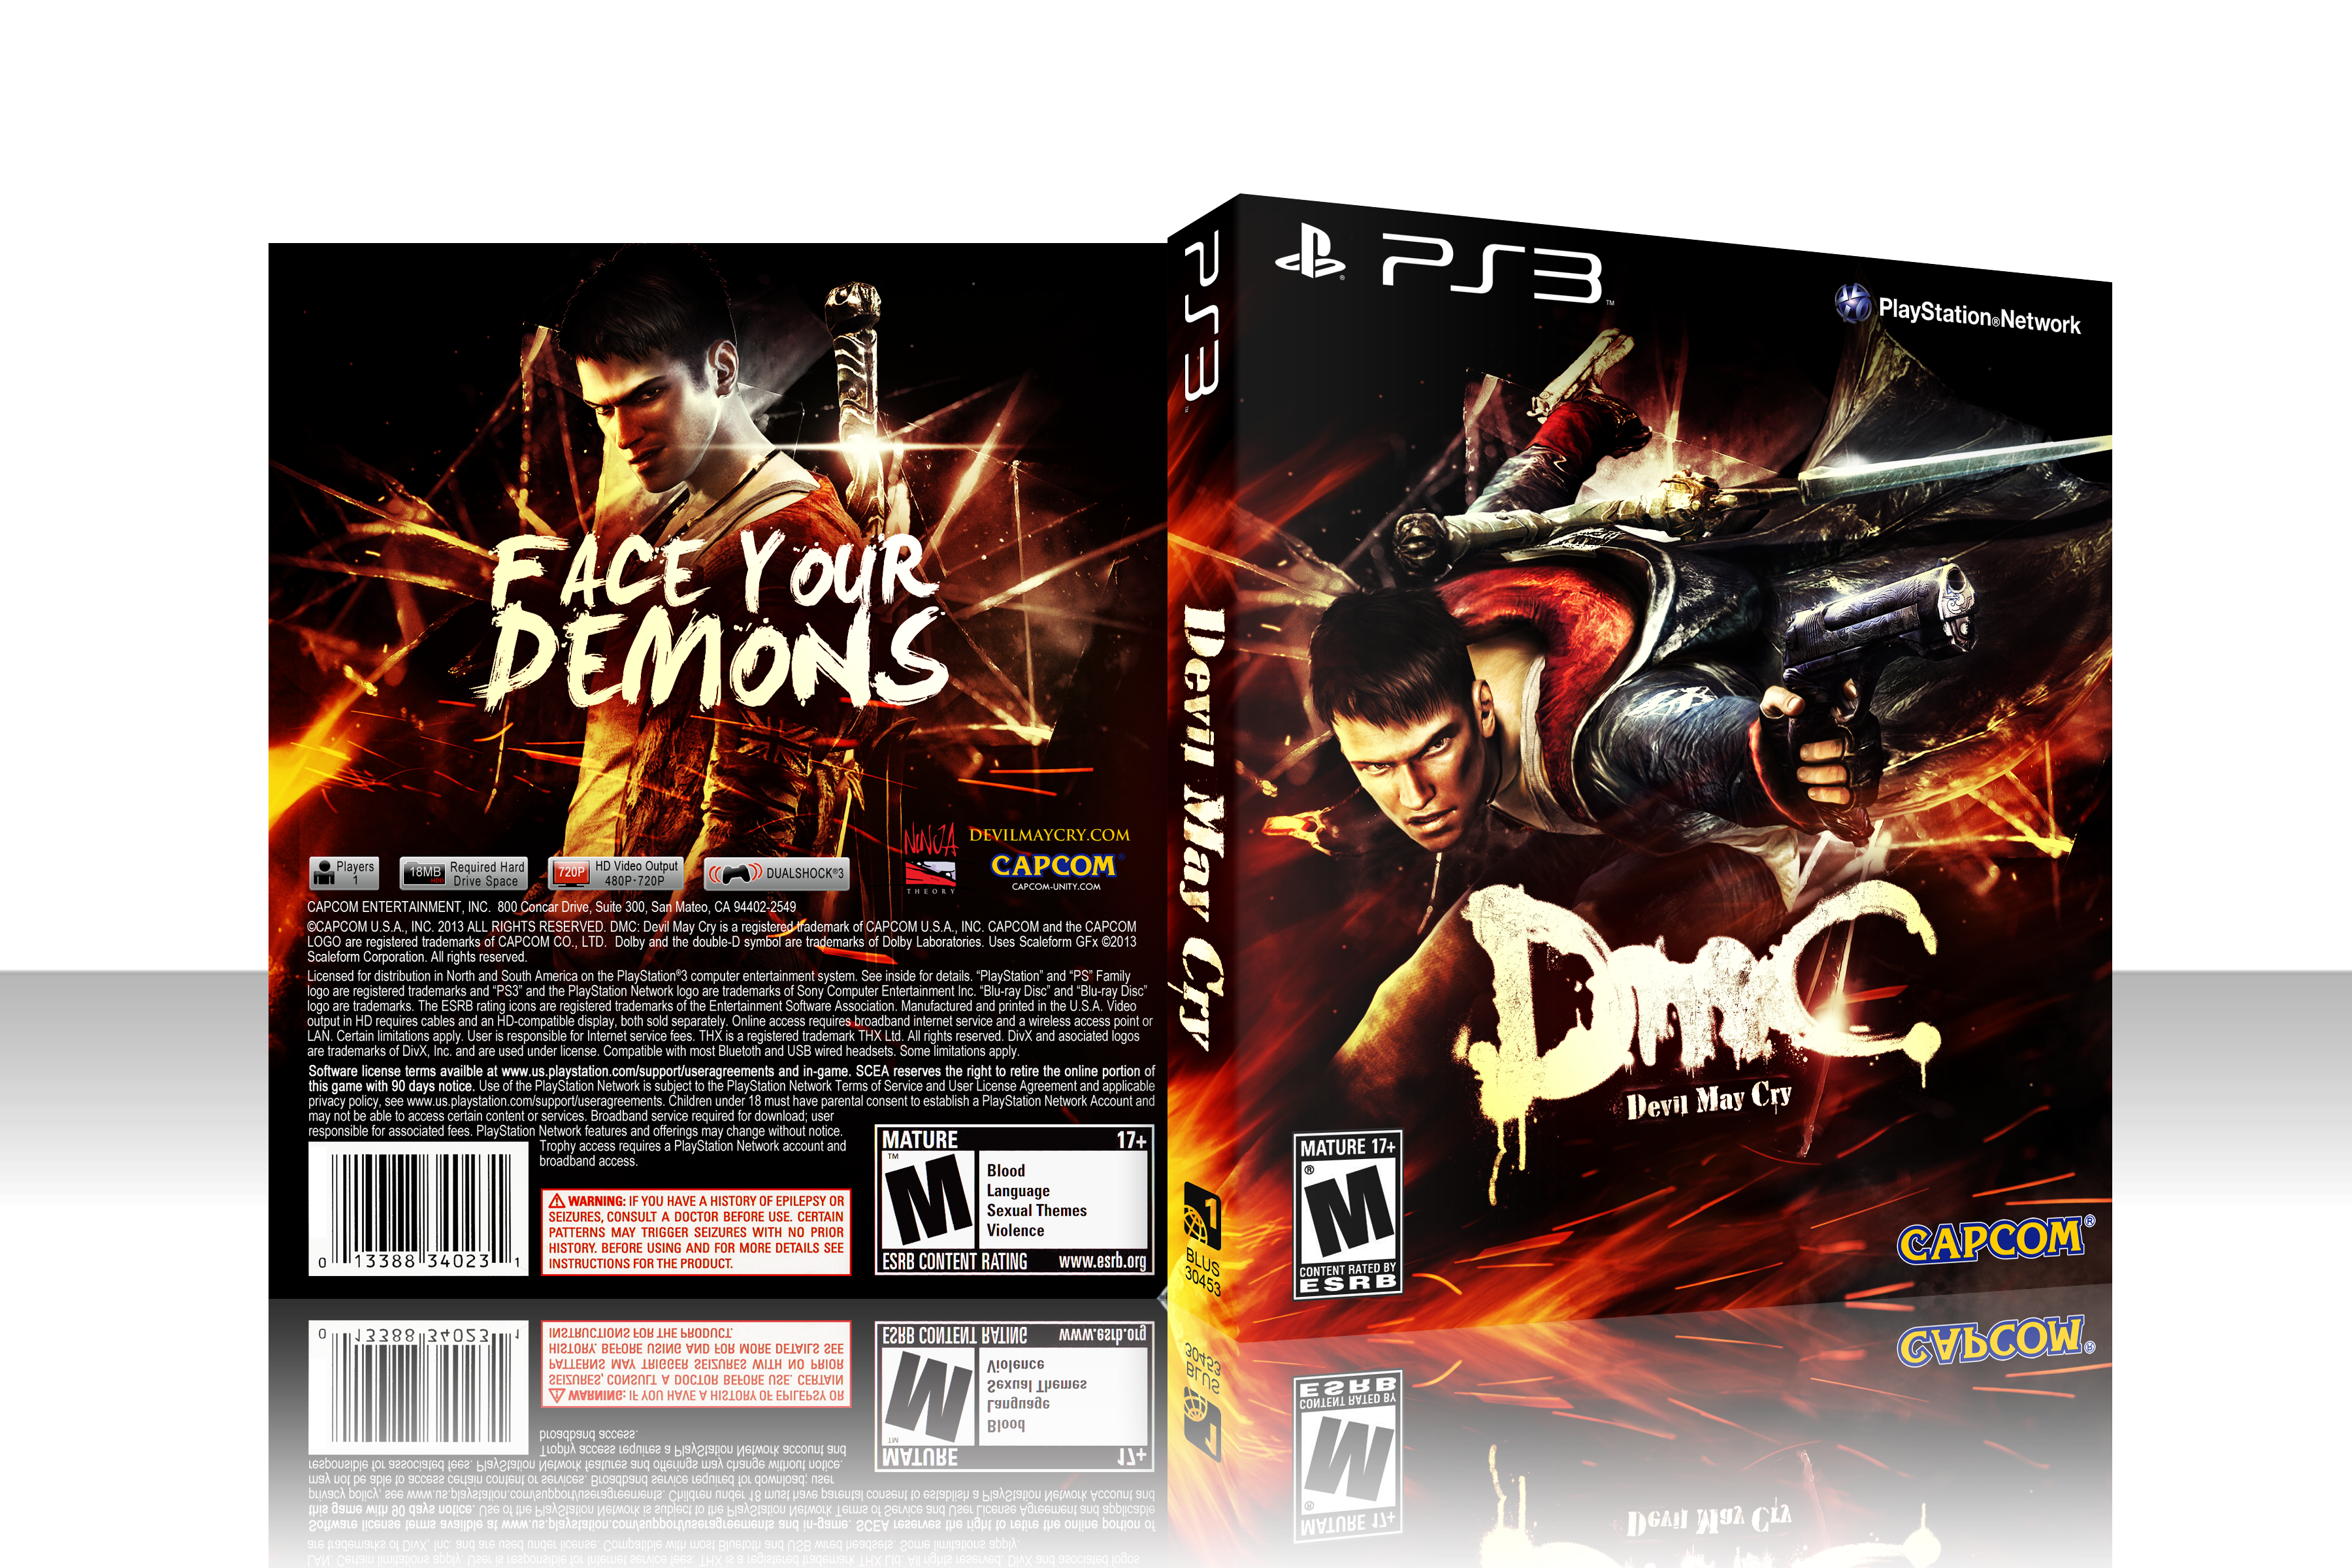 Dmc код. Devil May Cry 1 обложка. Devil May Cry 4 диск с игрой. DMC 3 пиратский диск. DMC Devil May Cry ps3 Cover.